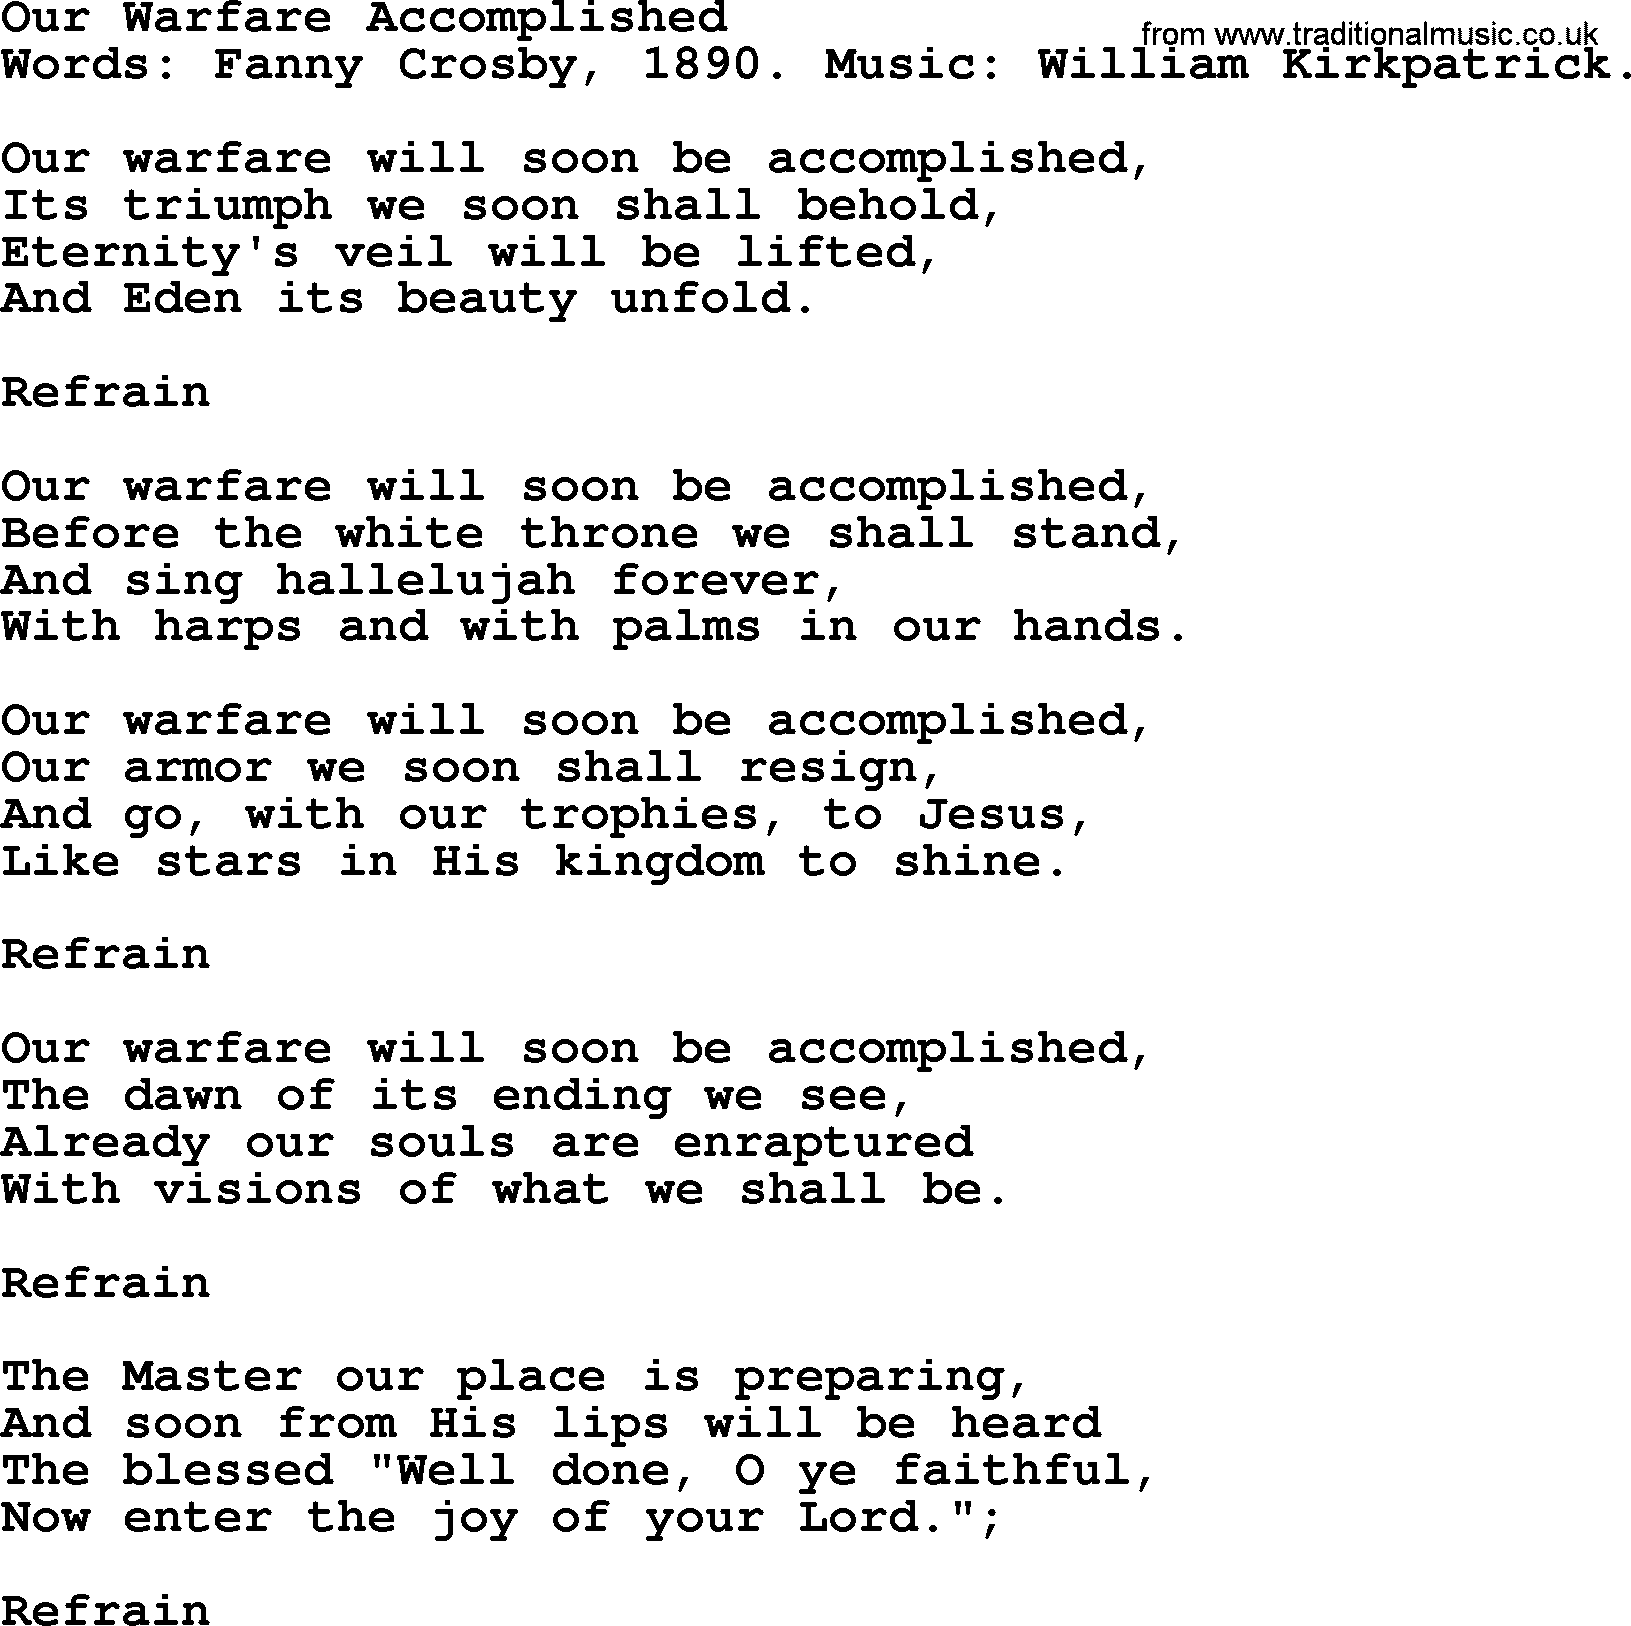 Fanny Crosby song: Our Warfare Accomplished, lyrics